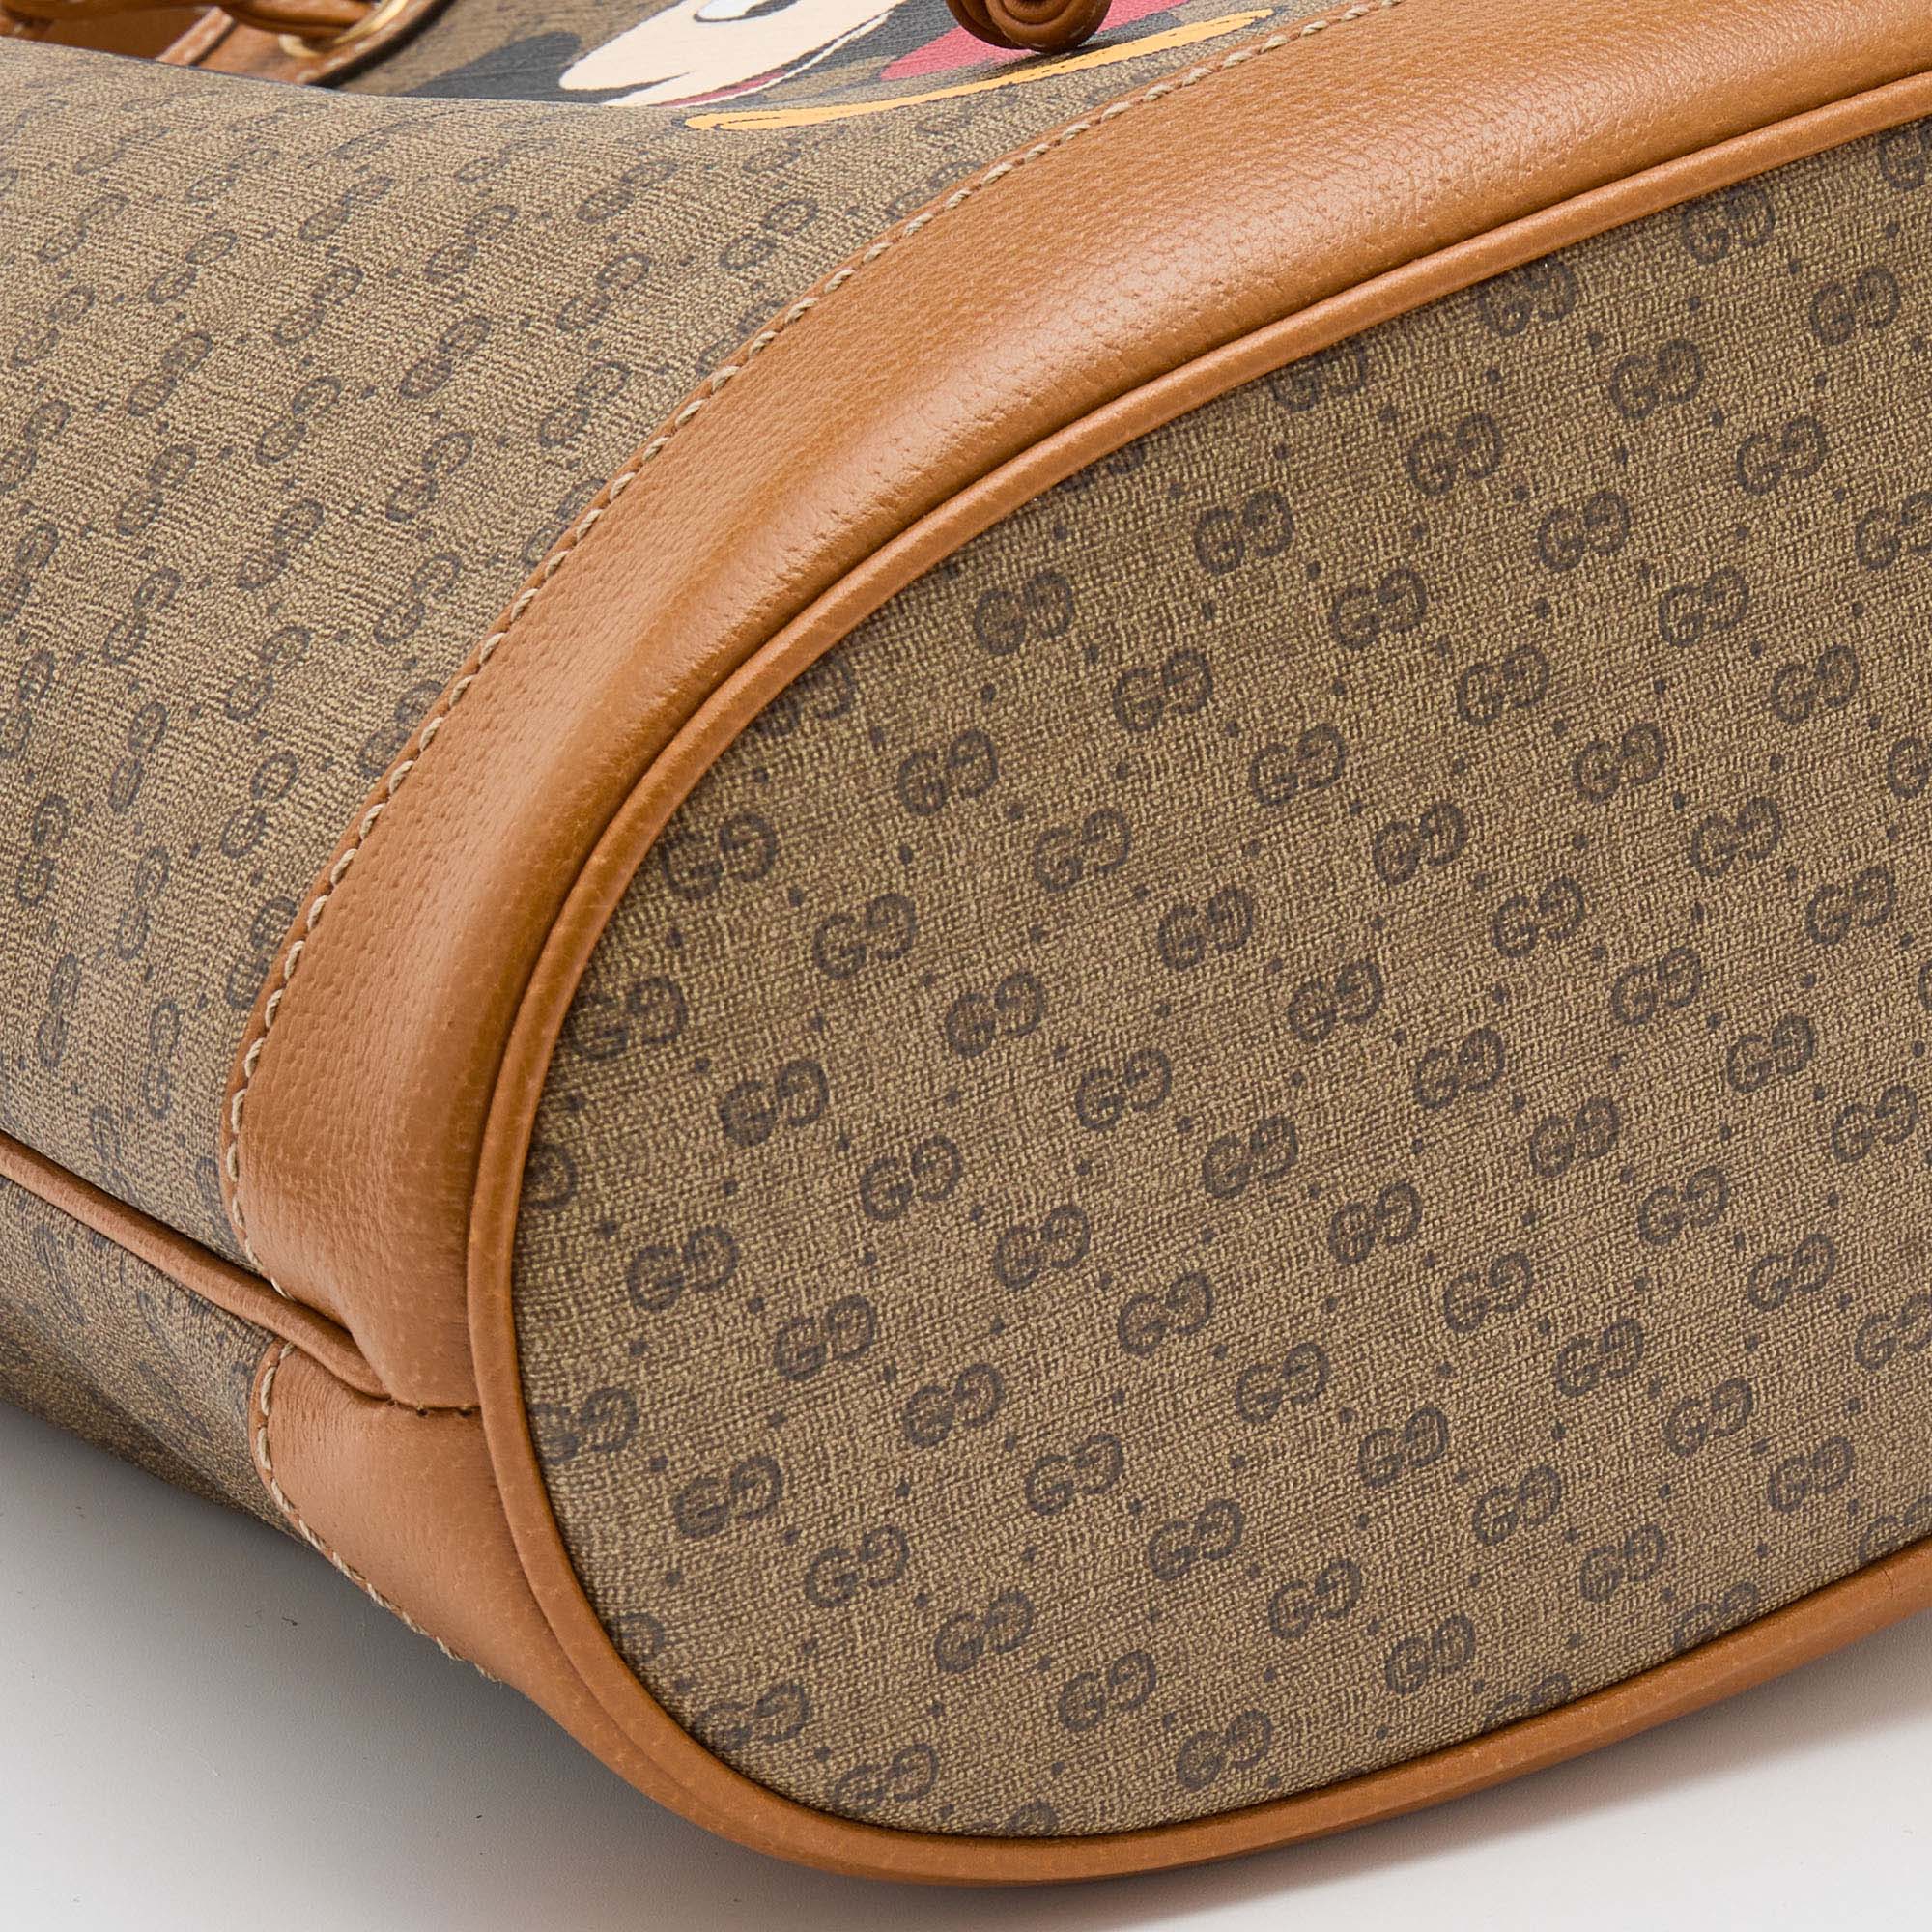 Gucci x Disney Candy GG Mickey Mouse Bucket Bag w/Tags - Brown Bucket Bags,  Handbags - GUC1347905